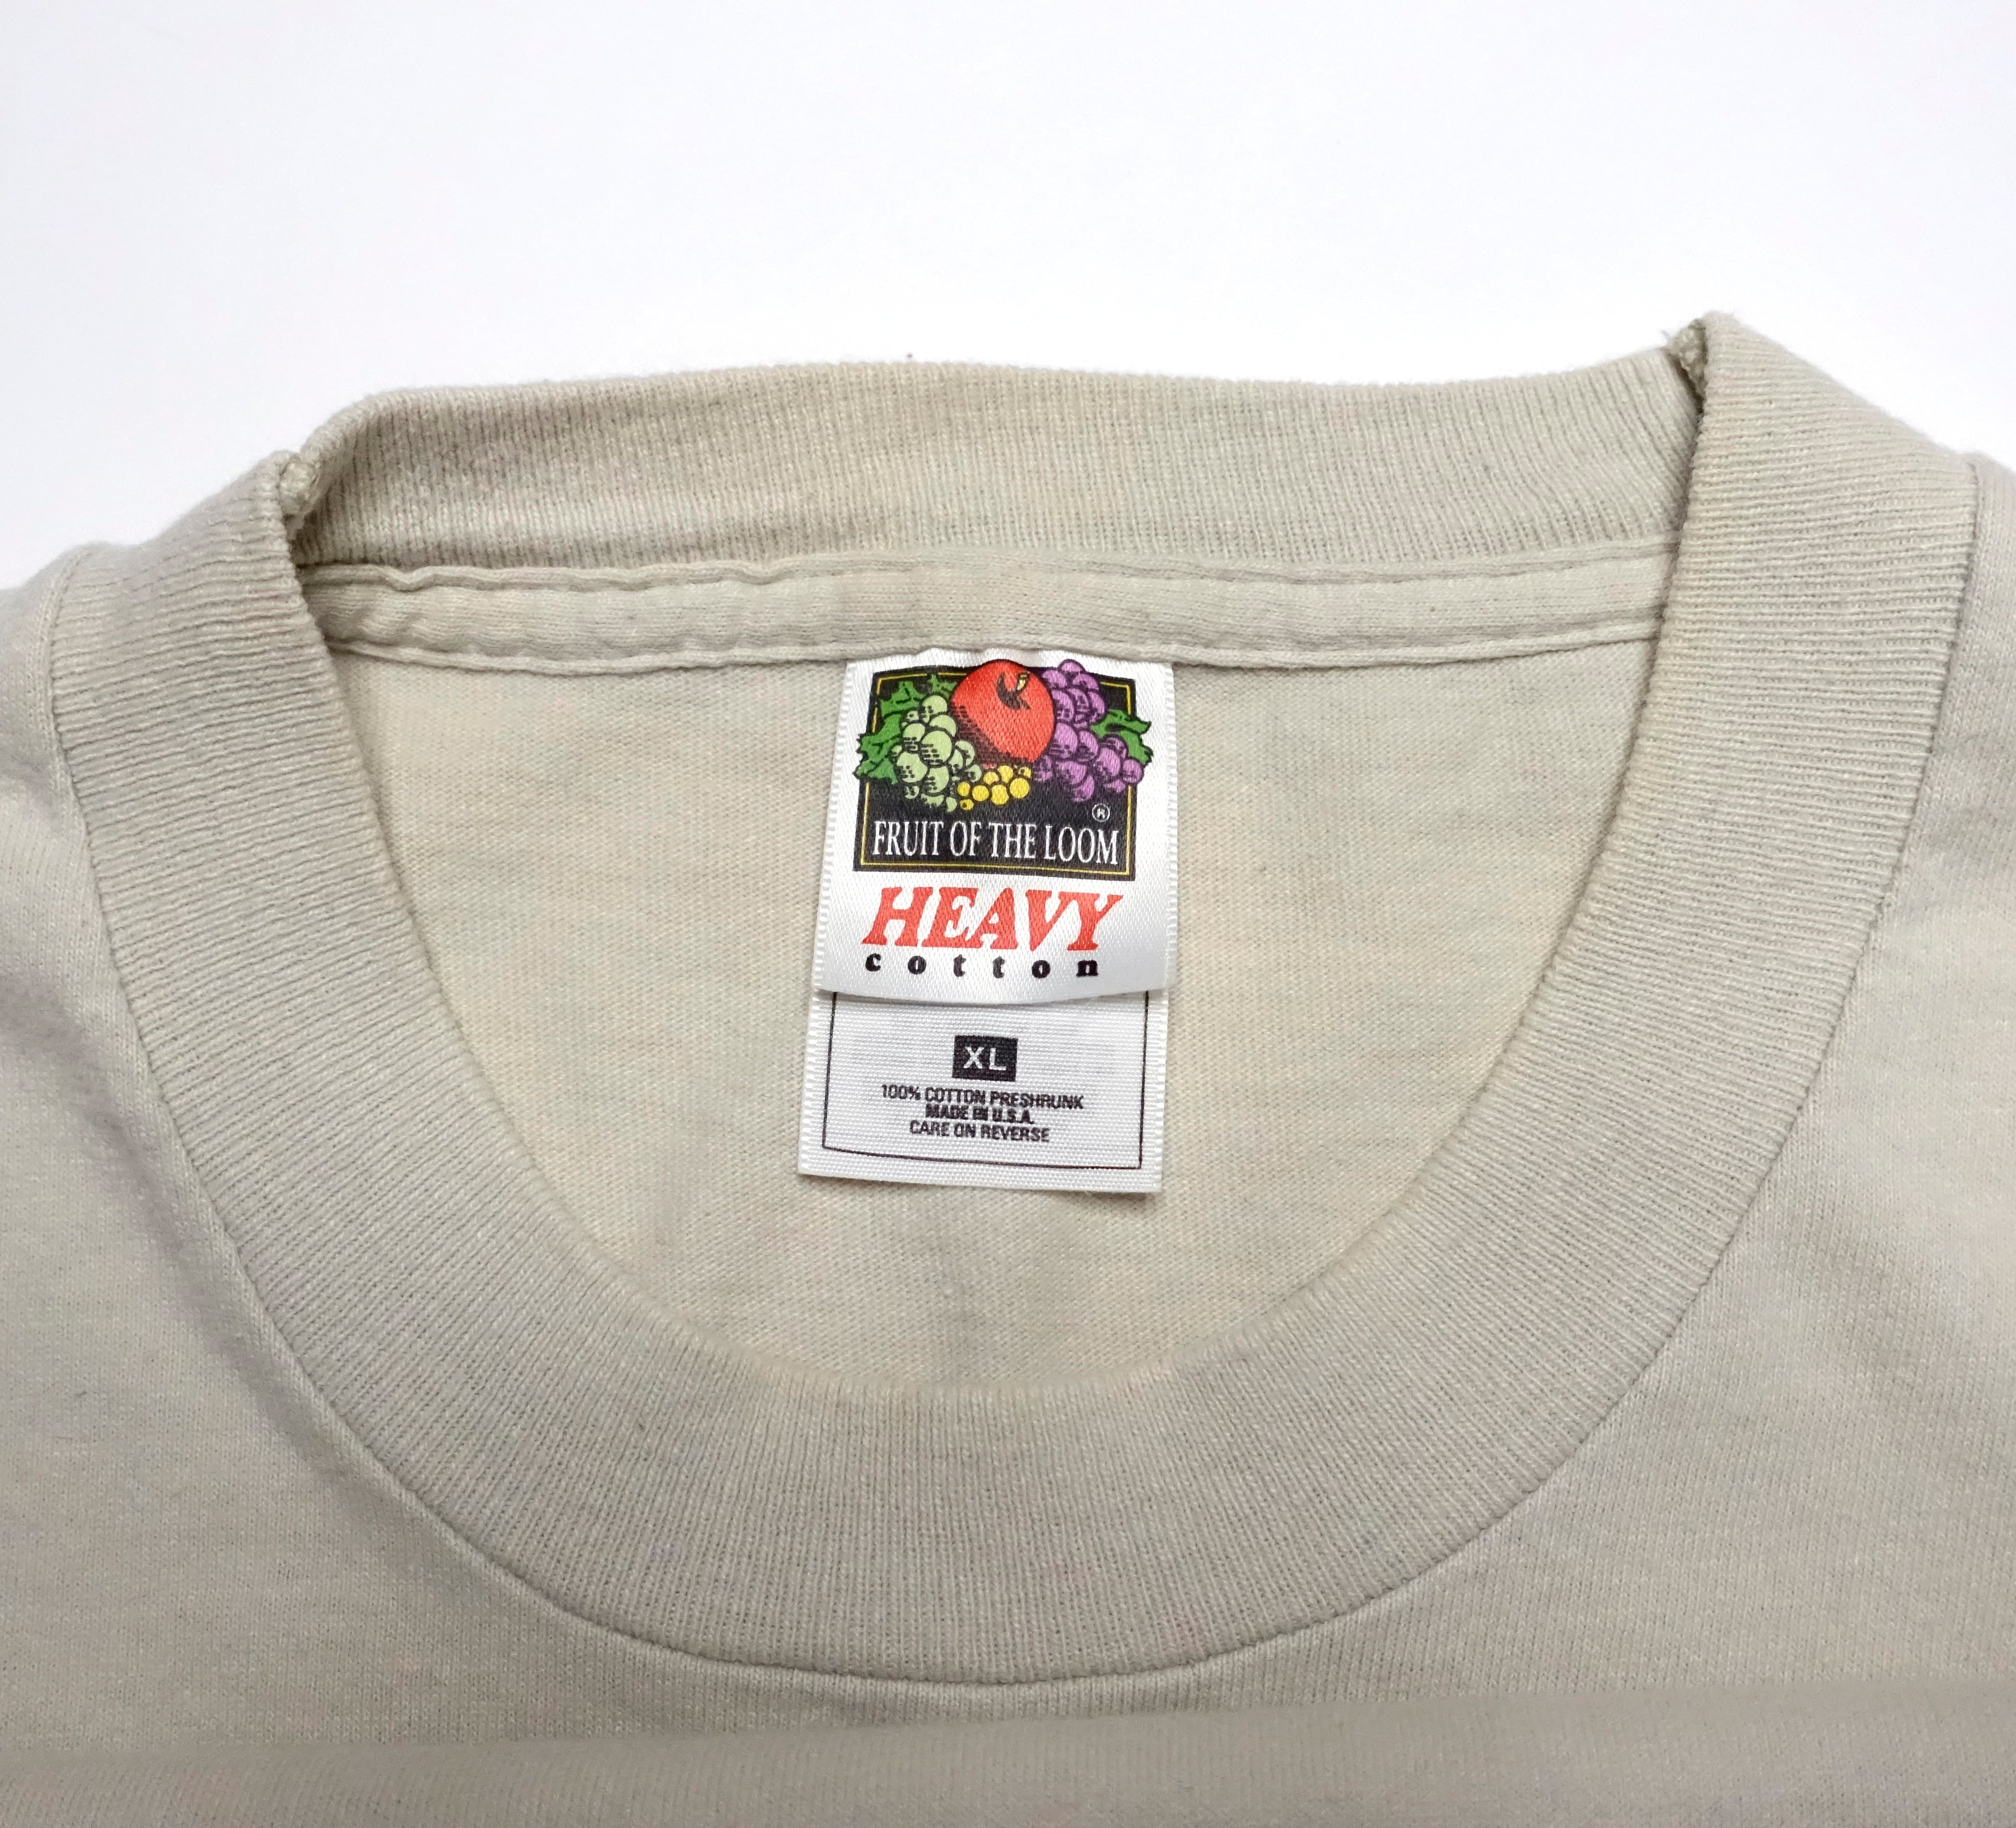 Samiam - Soar 1991 Tour Shirt Size XL